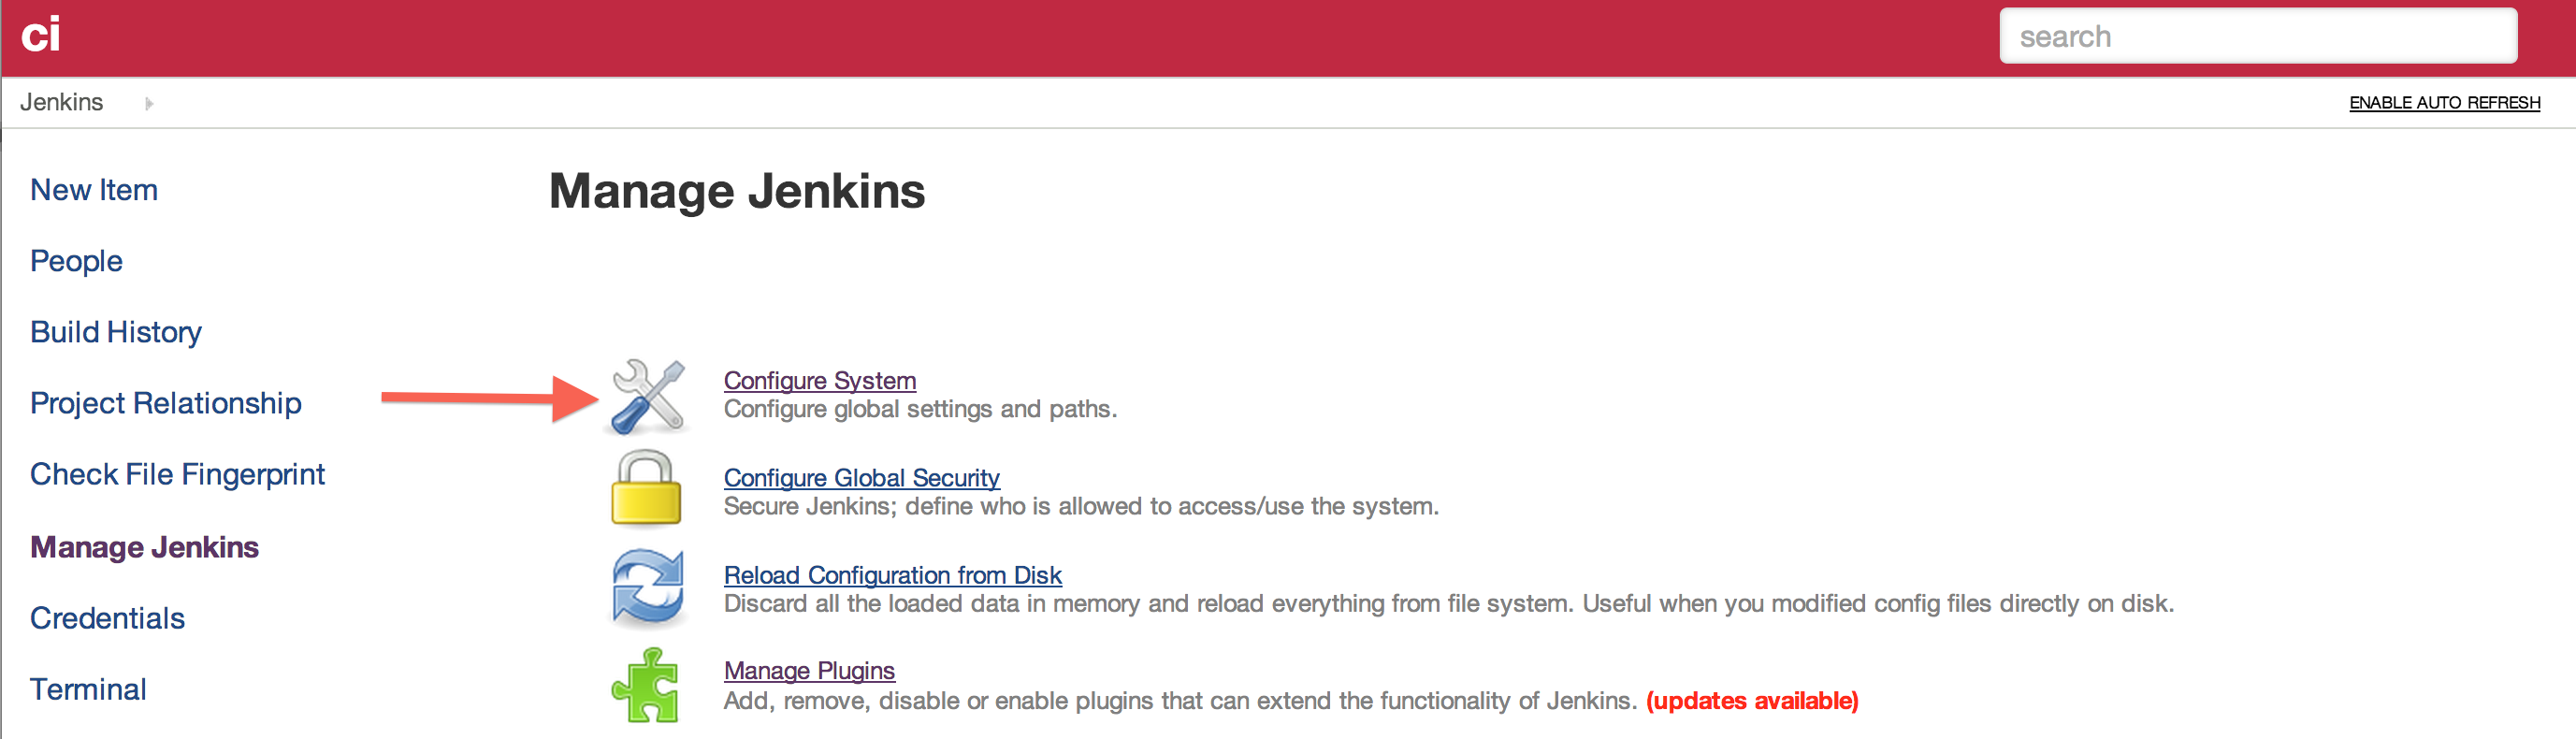 Jenkins configuration page